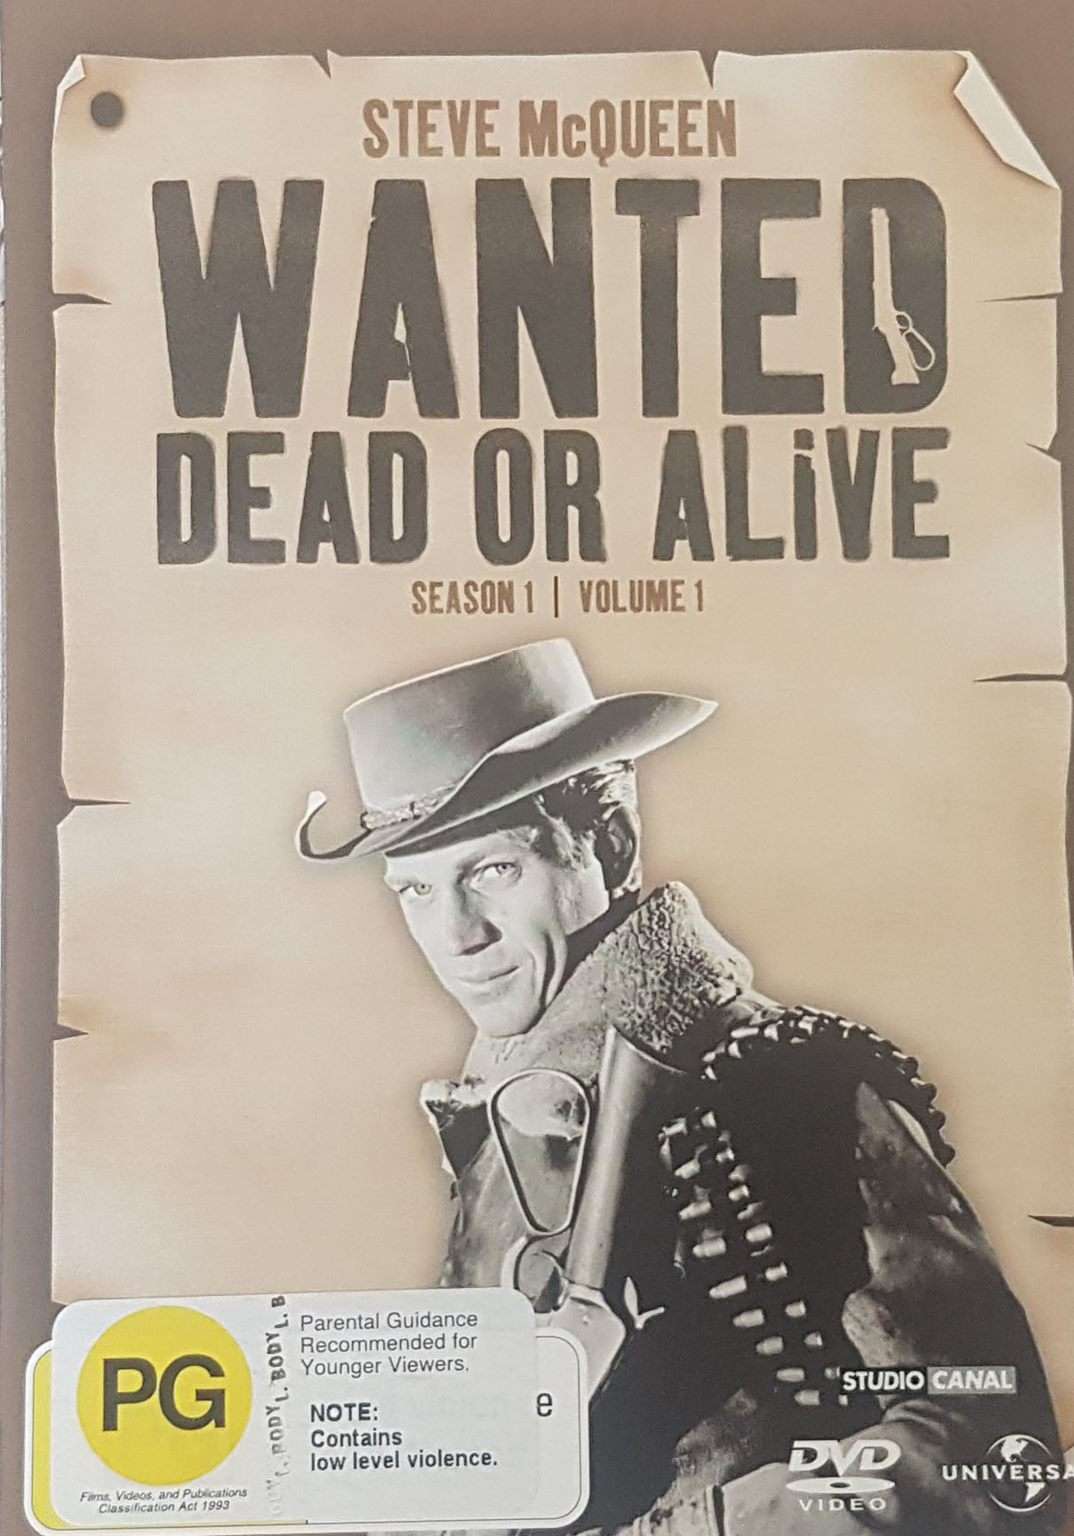 Wanted Dead or Alive: Season 1 Volume 1 Steve McQueen